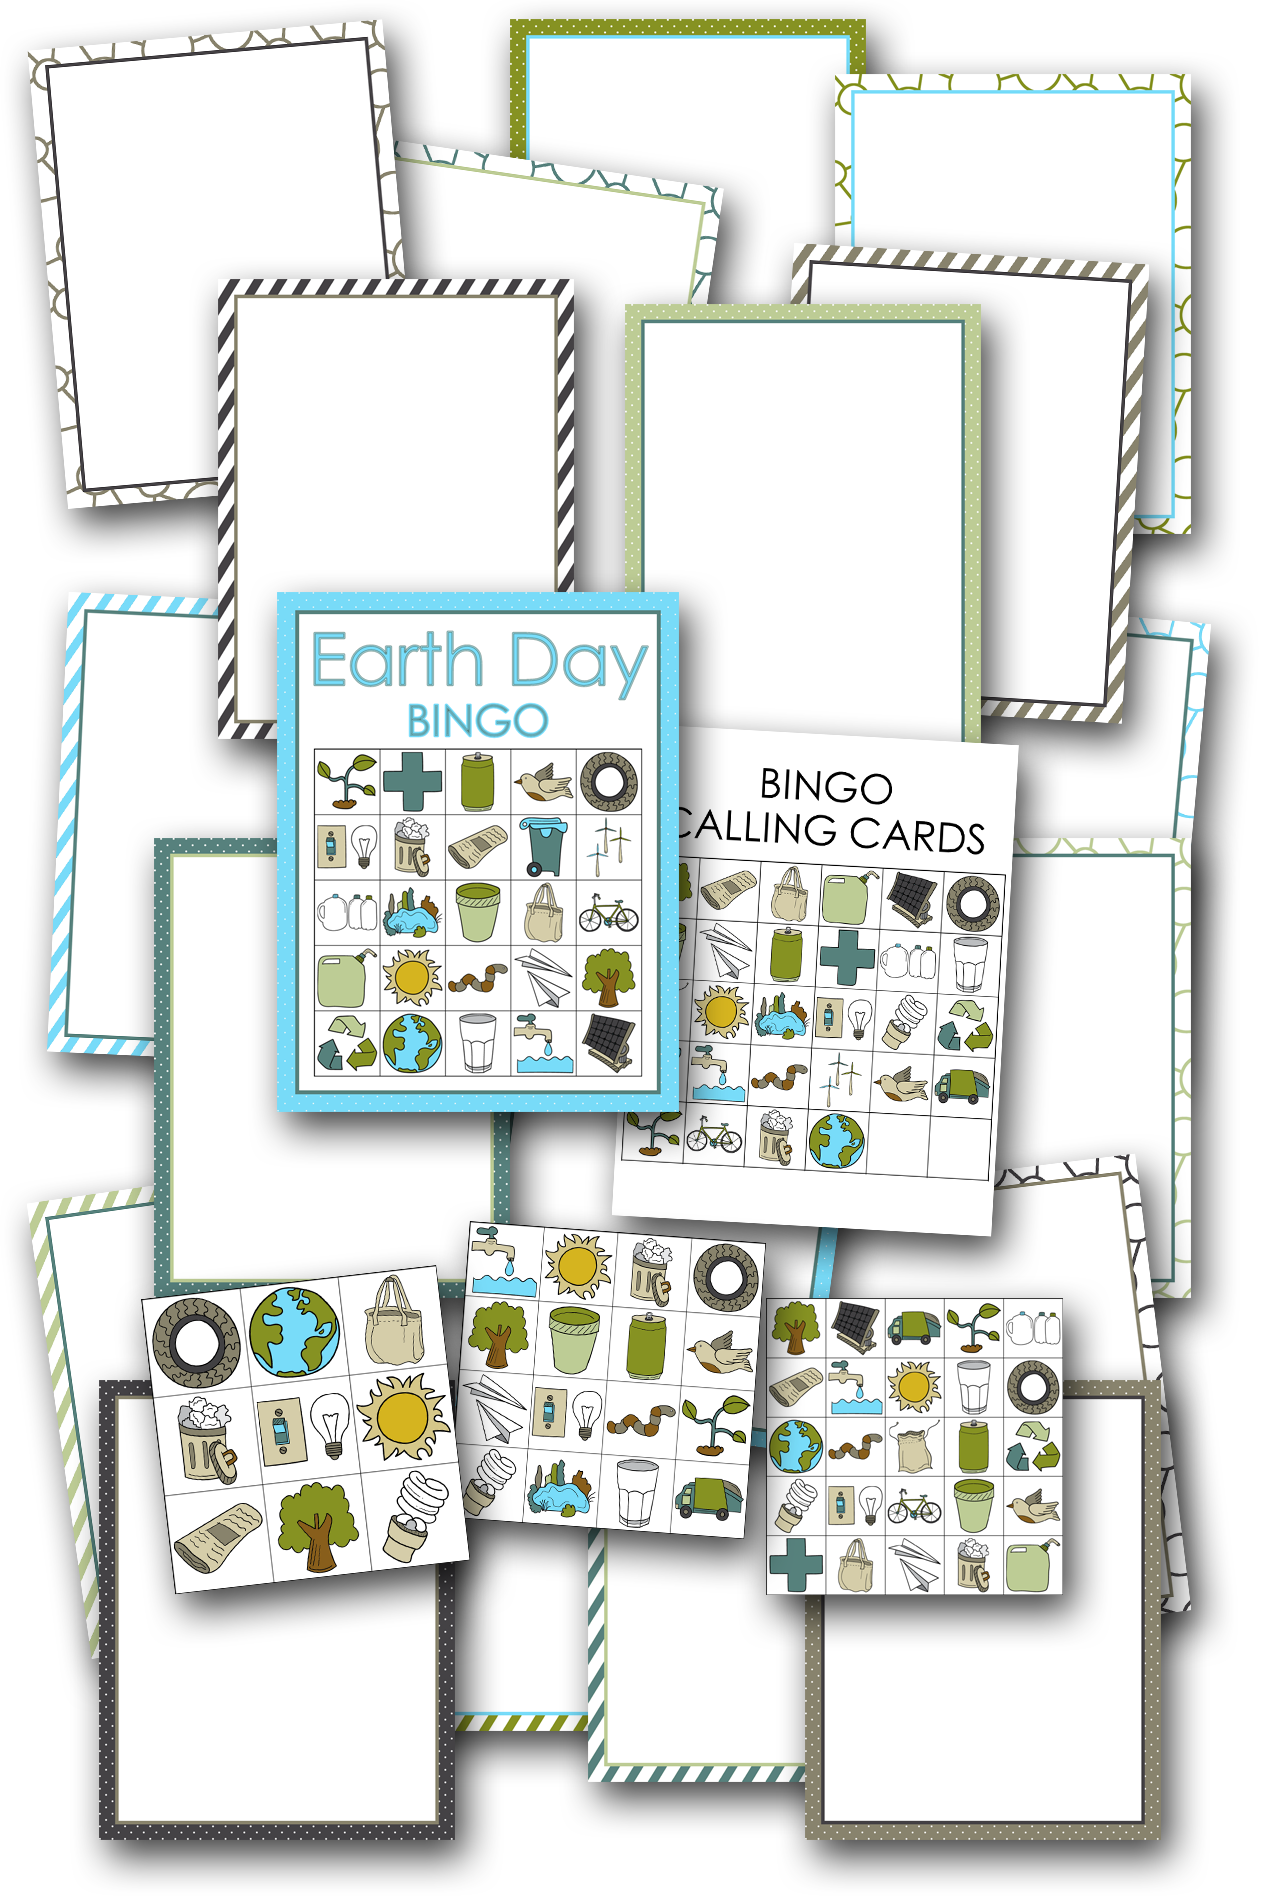 Simply Love PLR Earth Day Bingo Template Set 